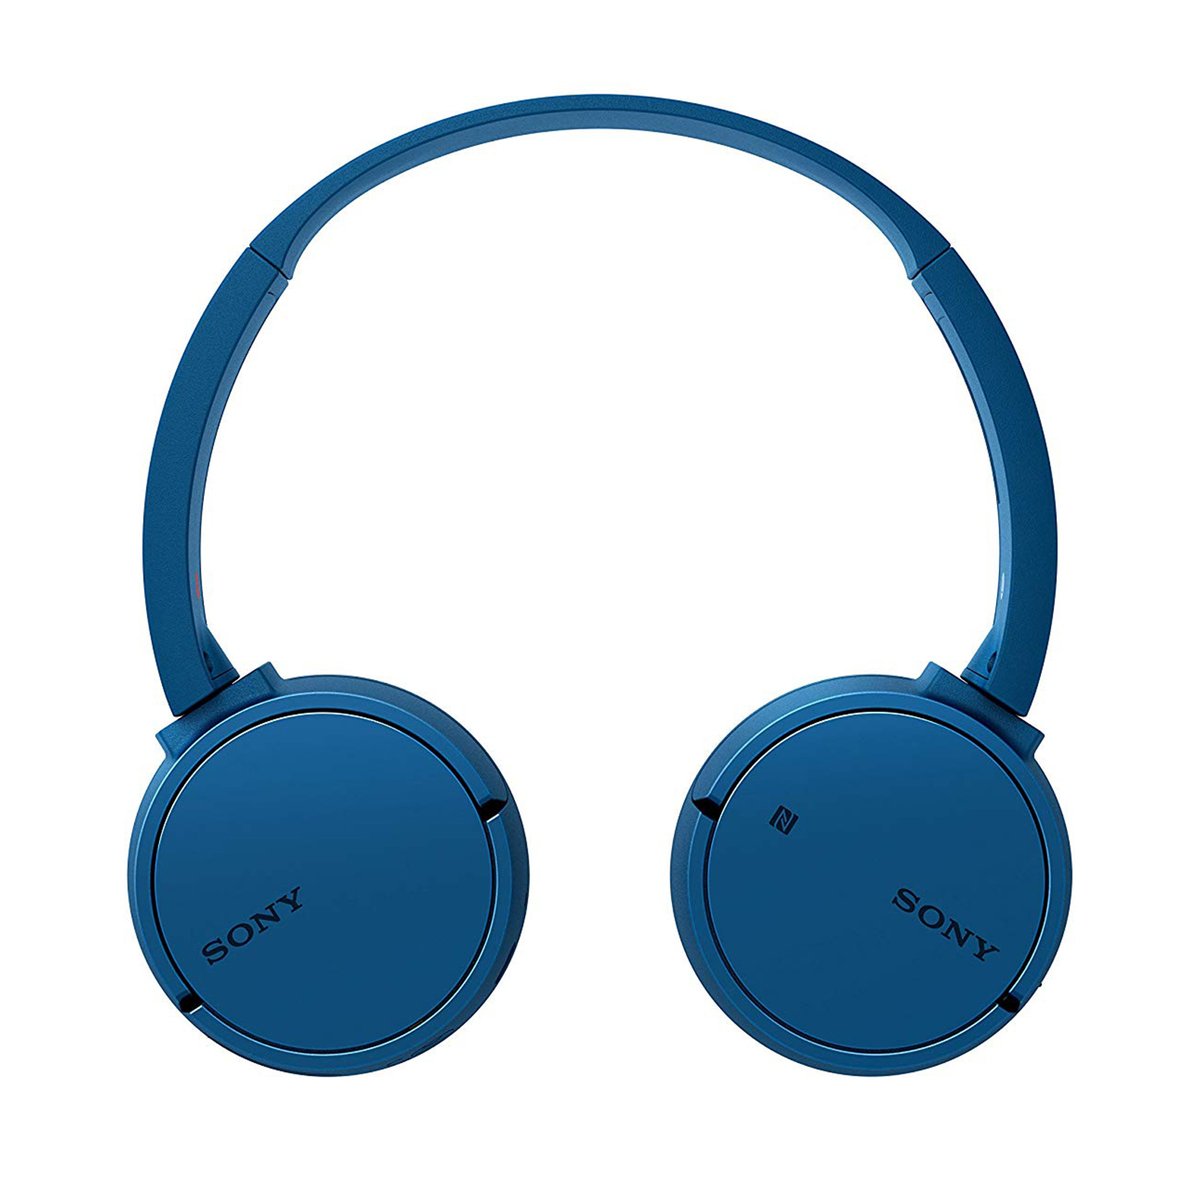 Sony Wireless Headphone WH-CH500 Blue